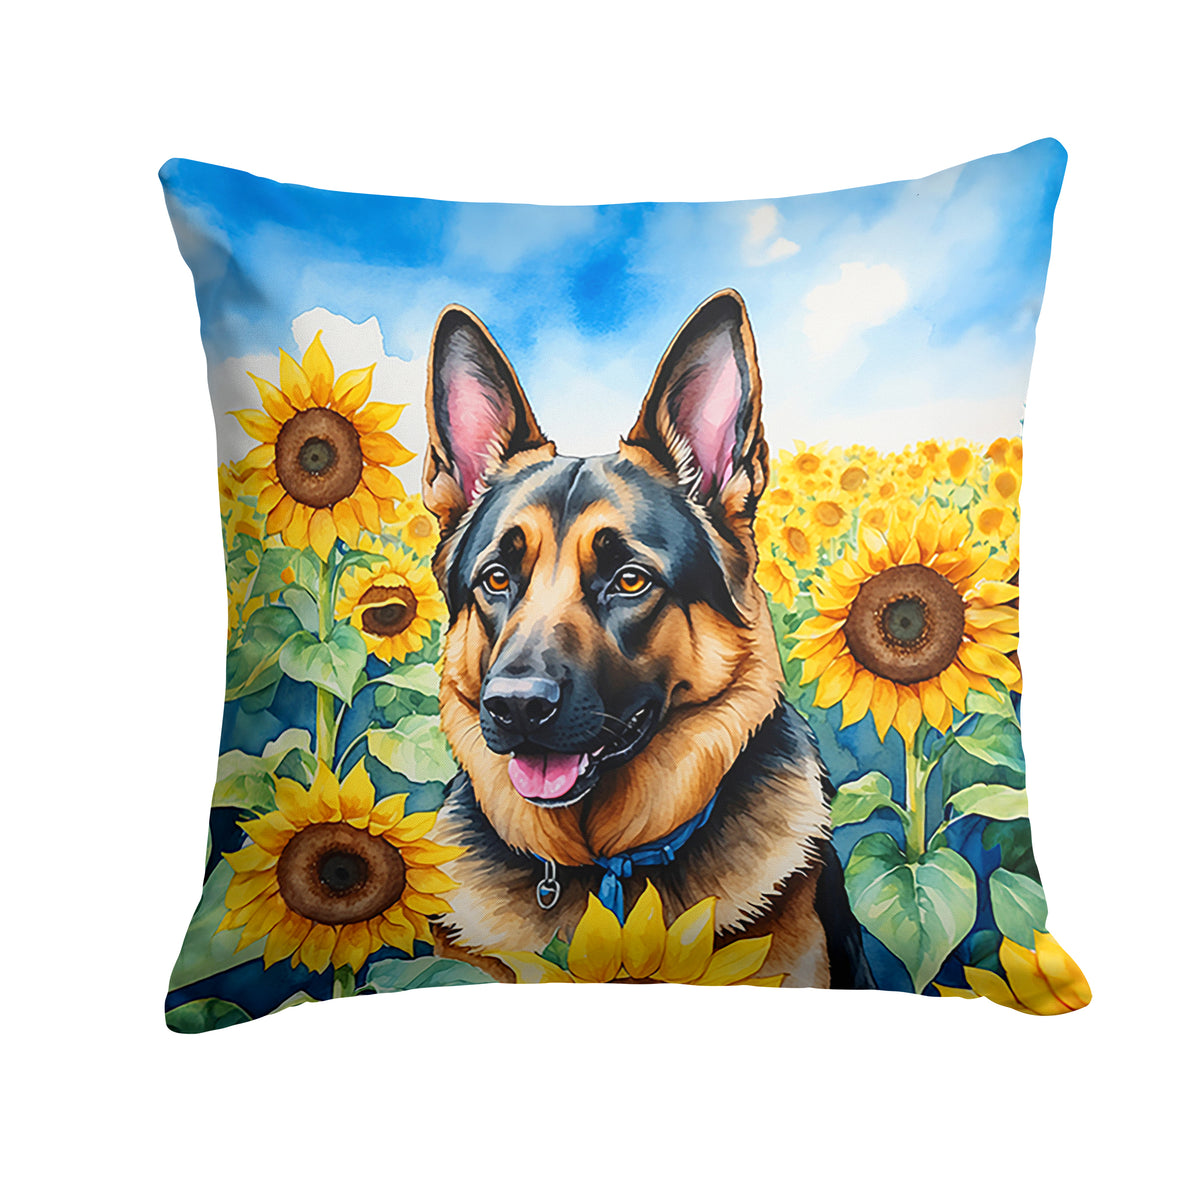 Buy this German Shepherd in Sunflowers Throw Pillow